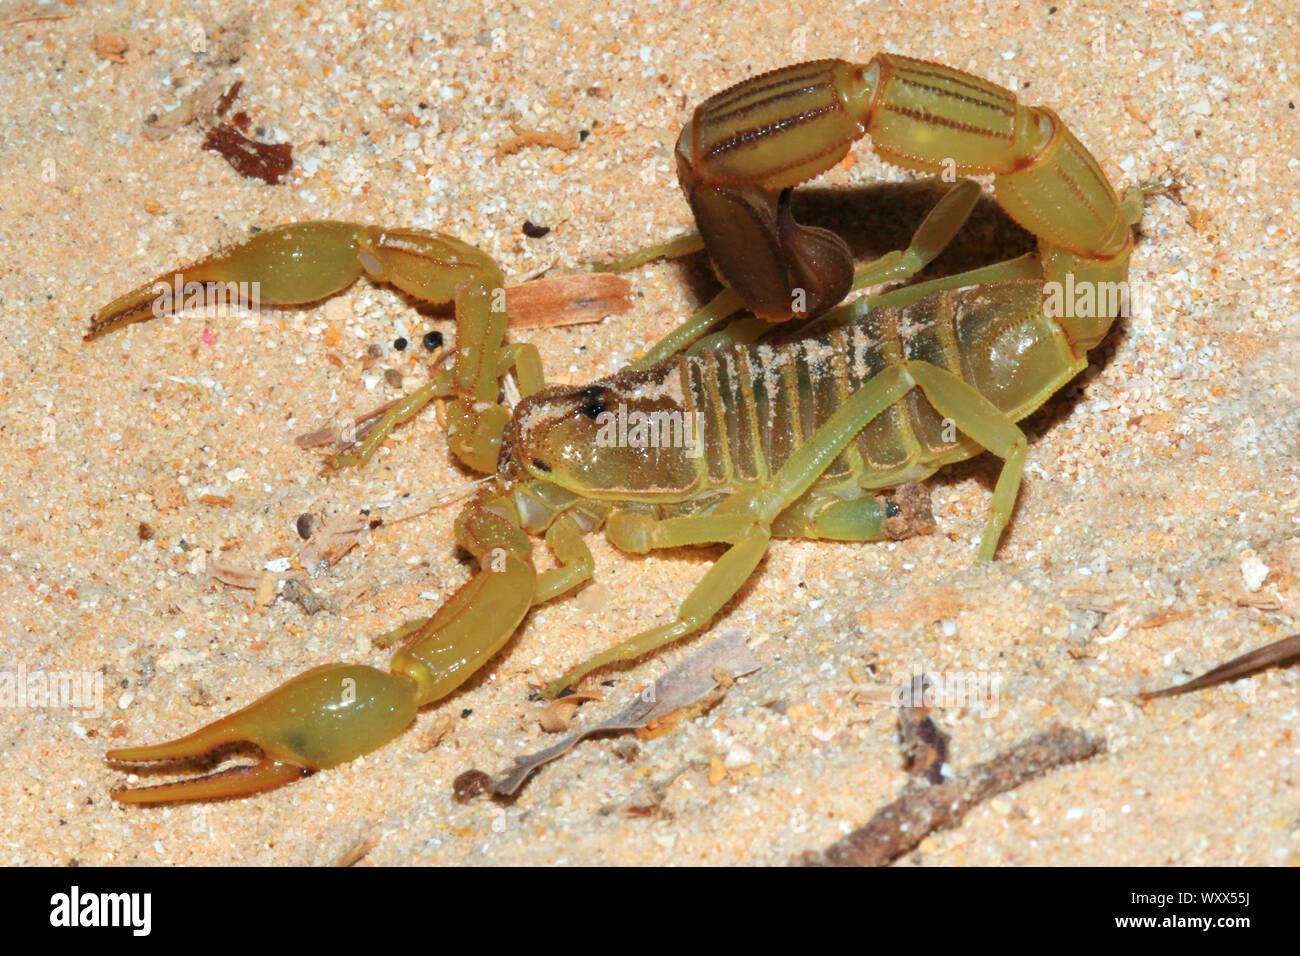 Yellow Fat Tail Scorpion (Androctonus australis) on sand, Mauritania Stock Photo